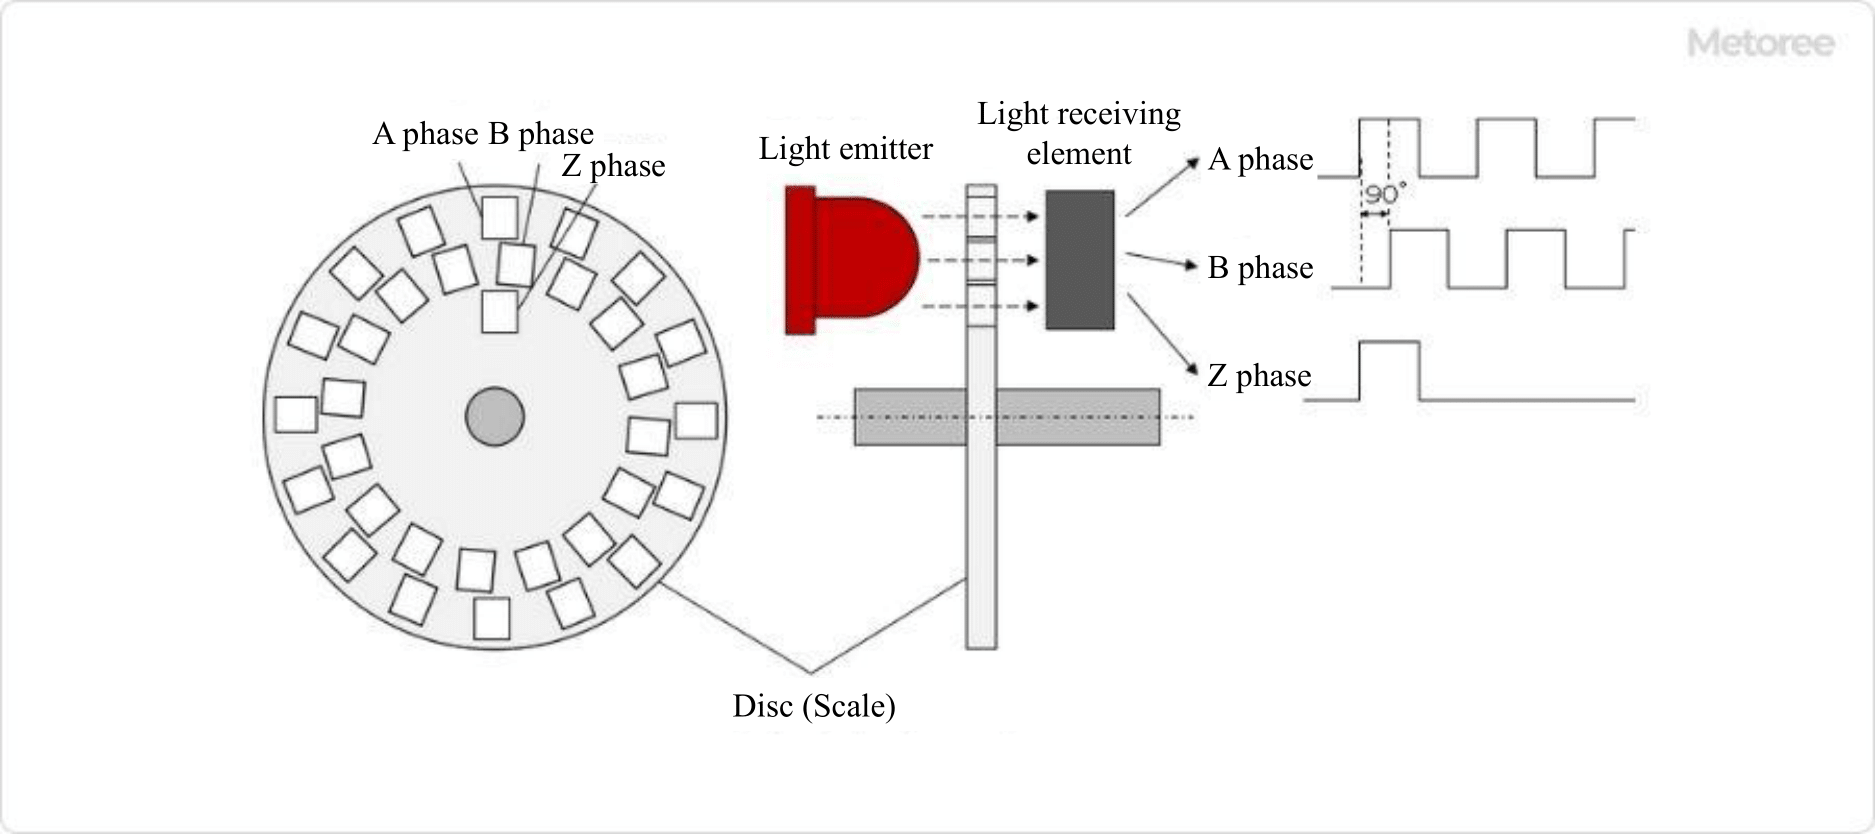 Figure 1. Optical incremental encoder configuration